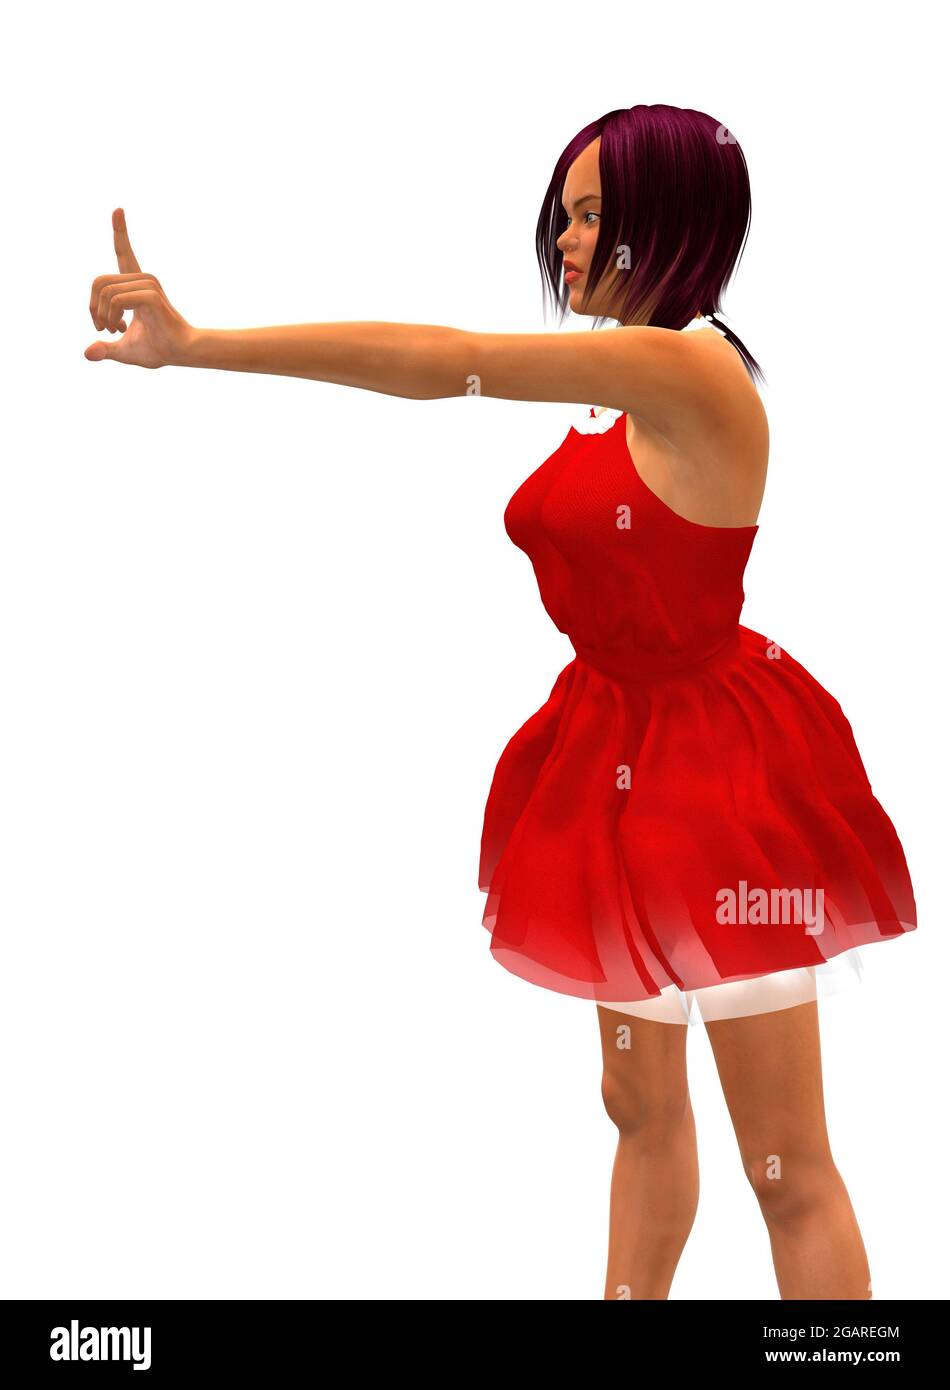 Junge ausdrucksstarke Frau trägt leuchtend rotes Kleid, 3d-Illustration. Stockfoto